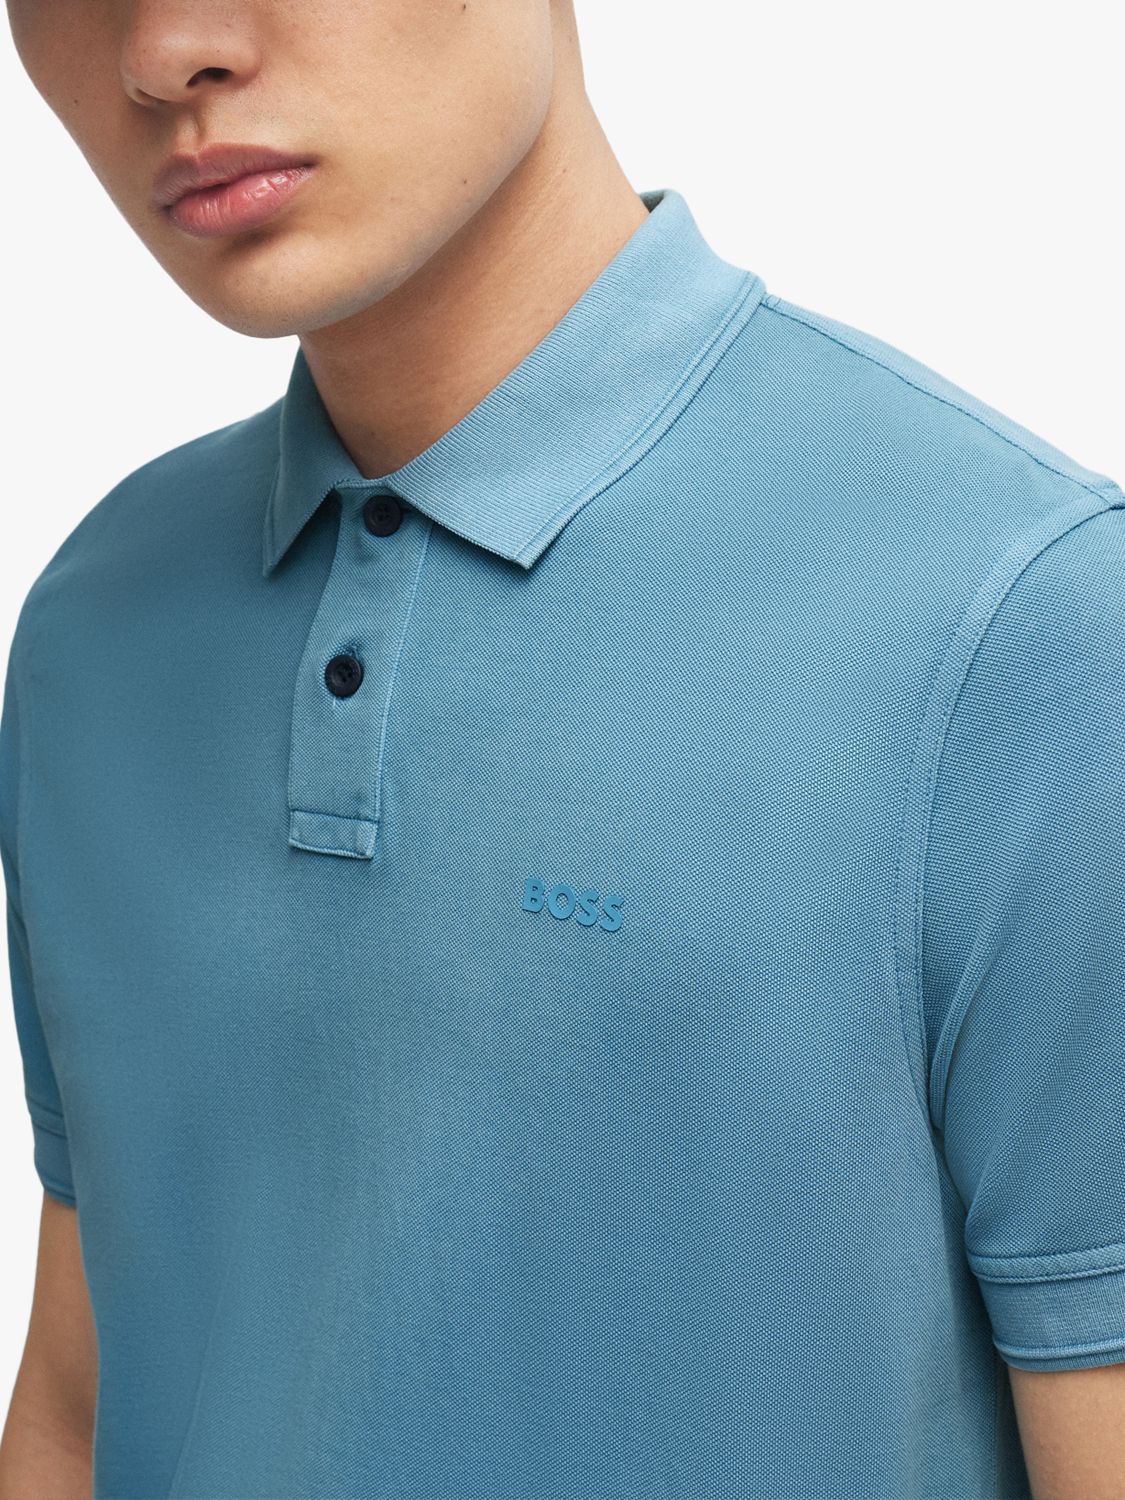 BOSS Prime Cotton Polo Top, Blue, XXL